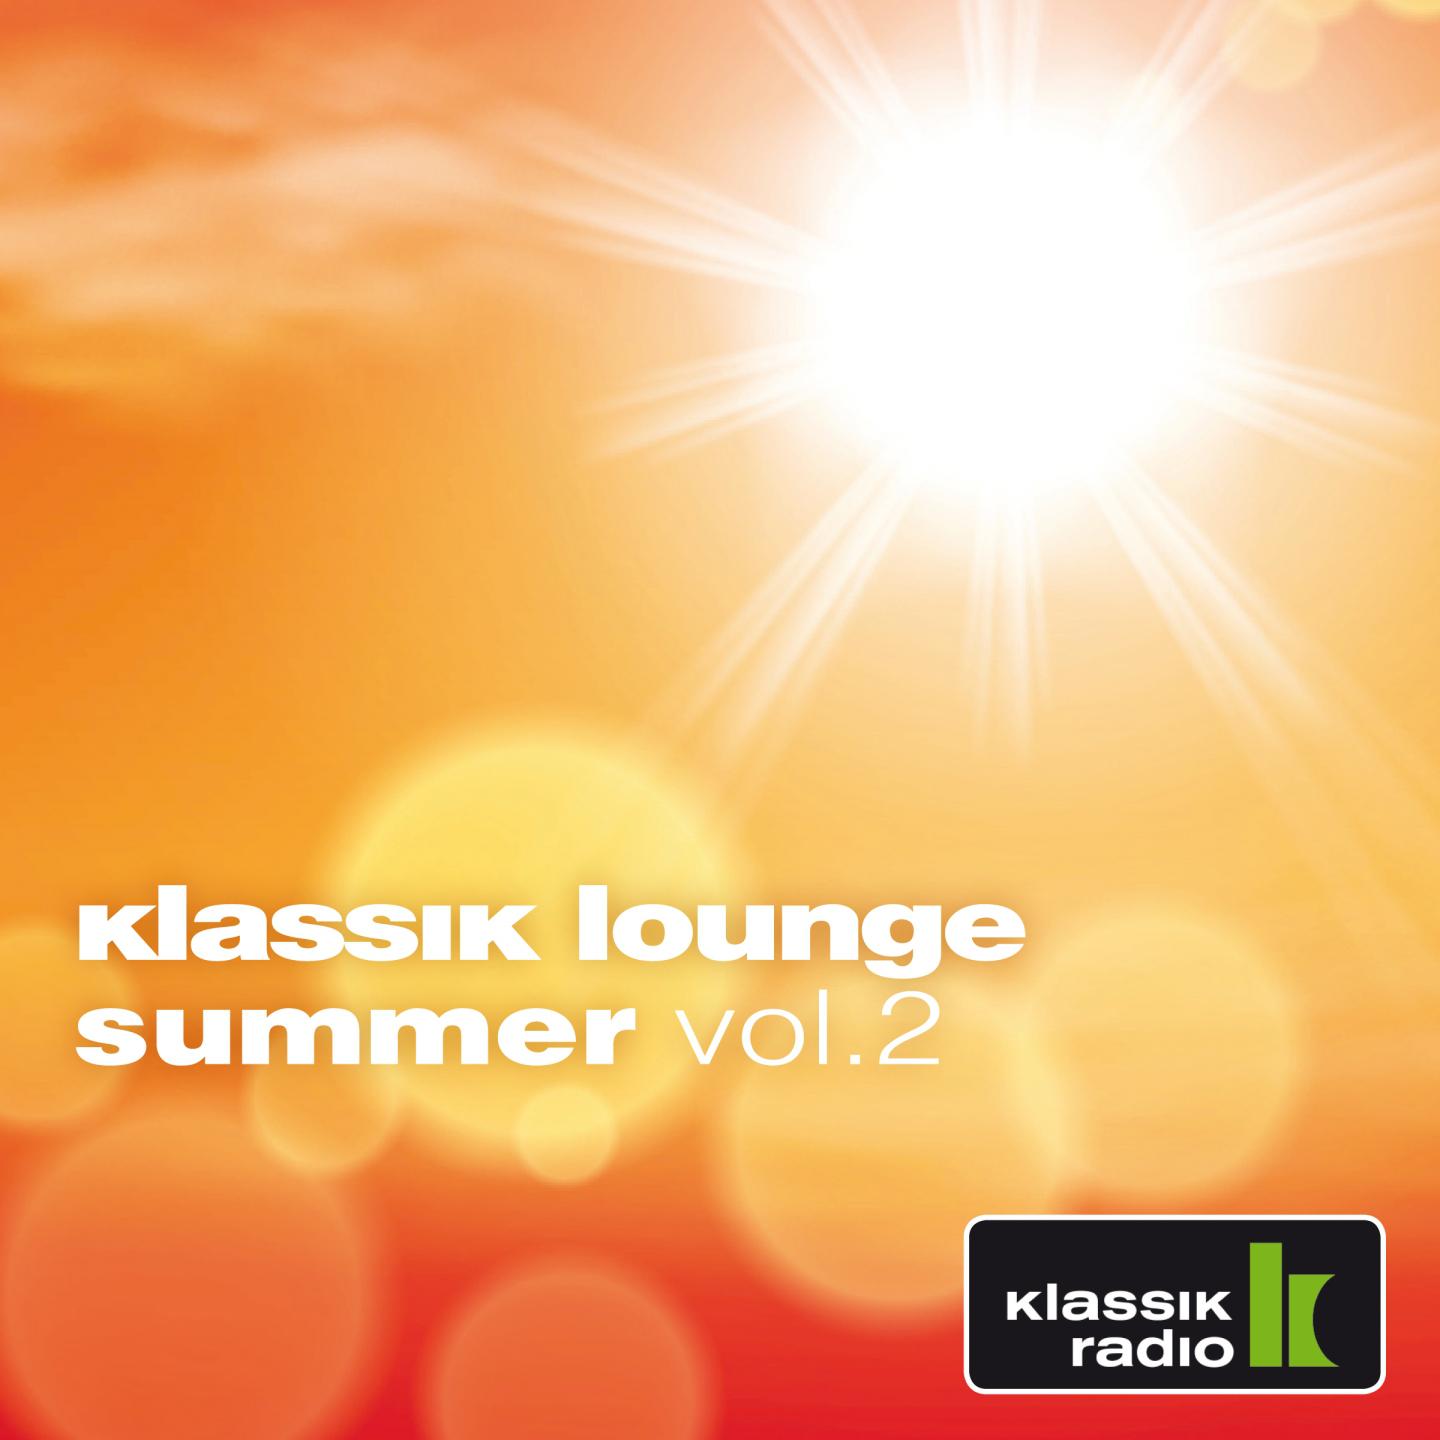 Klassik Lounge Summer, Vol. 2 (Continuous Mix by DJ Nartak, Pt. 1)